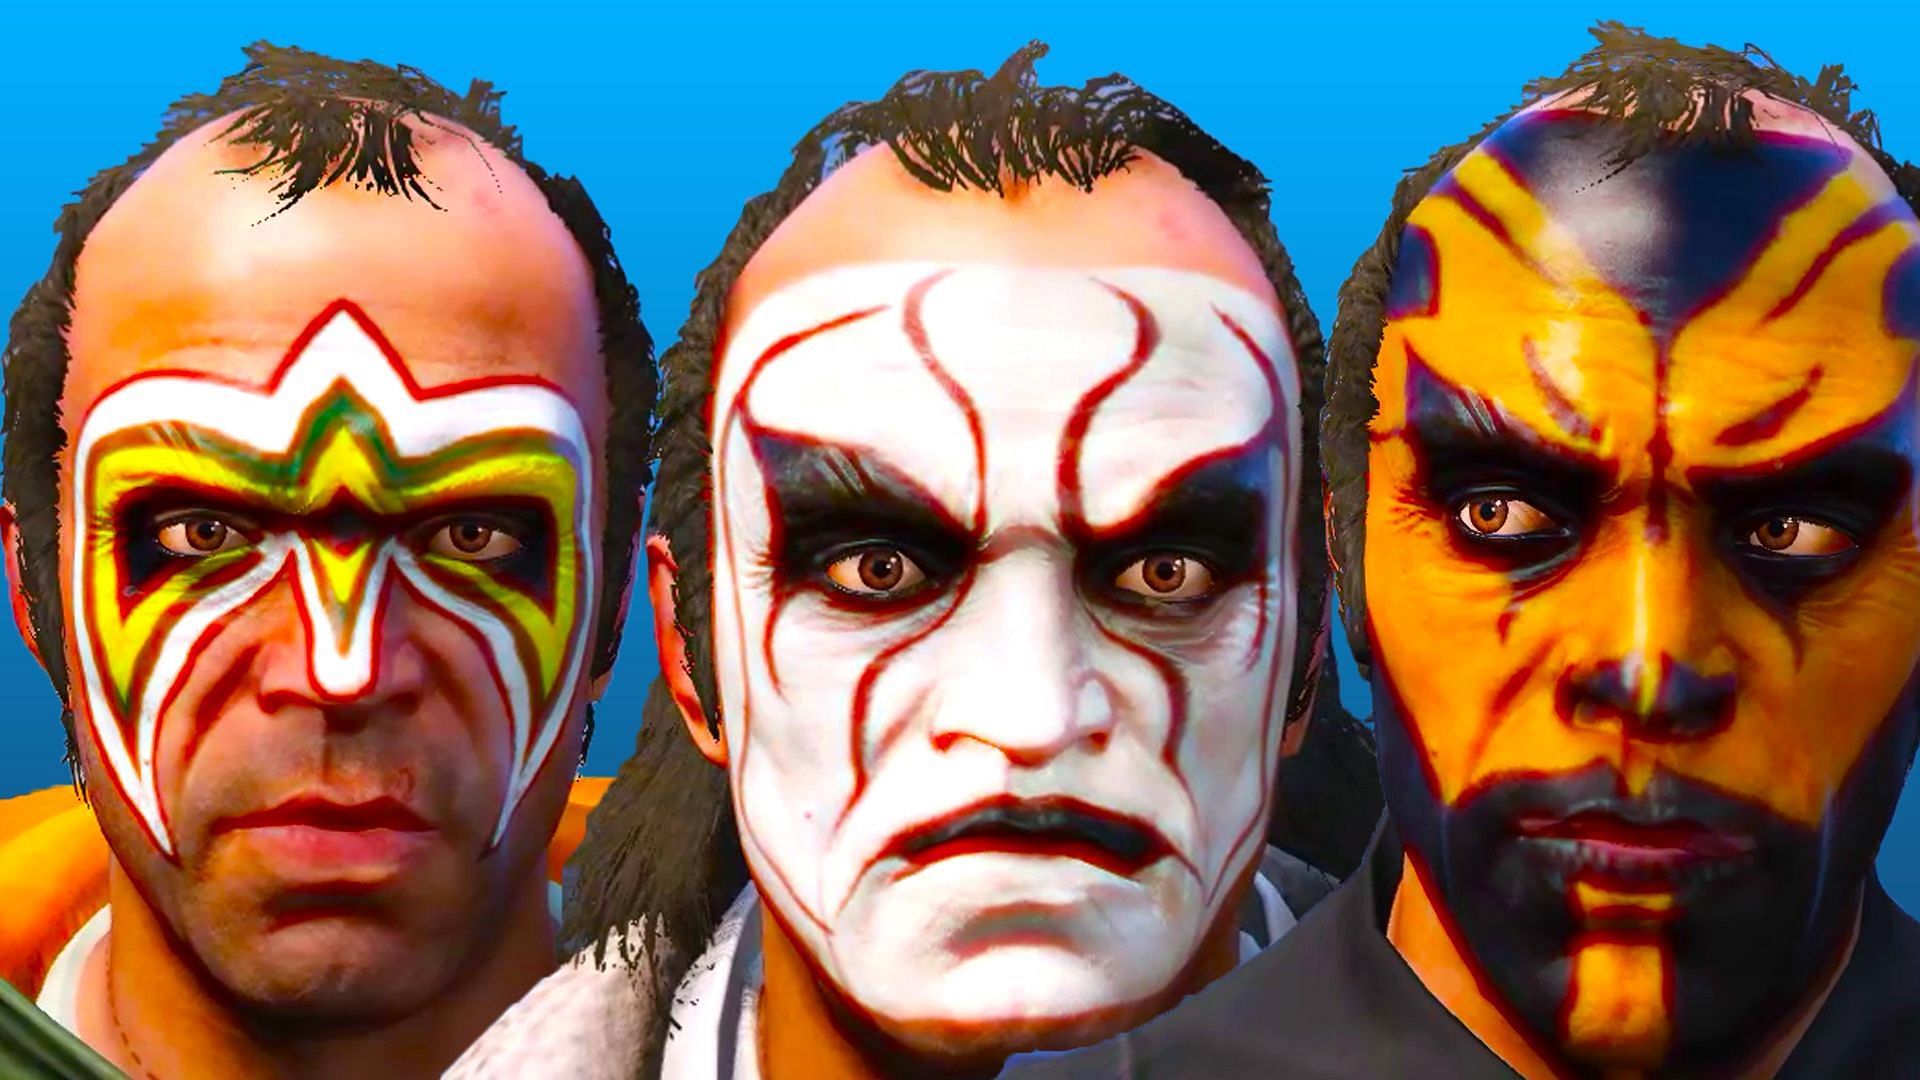 WWE Face-Paint Pack 3.0 mod in GTA 5 (Image via gta5-mods.com)